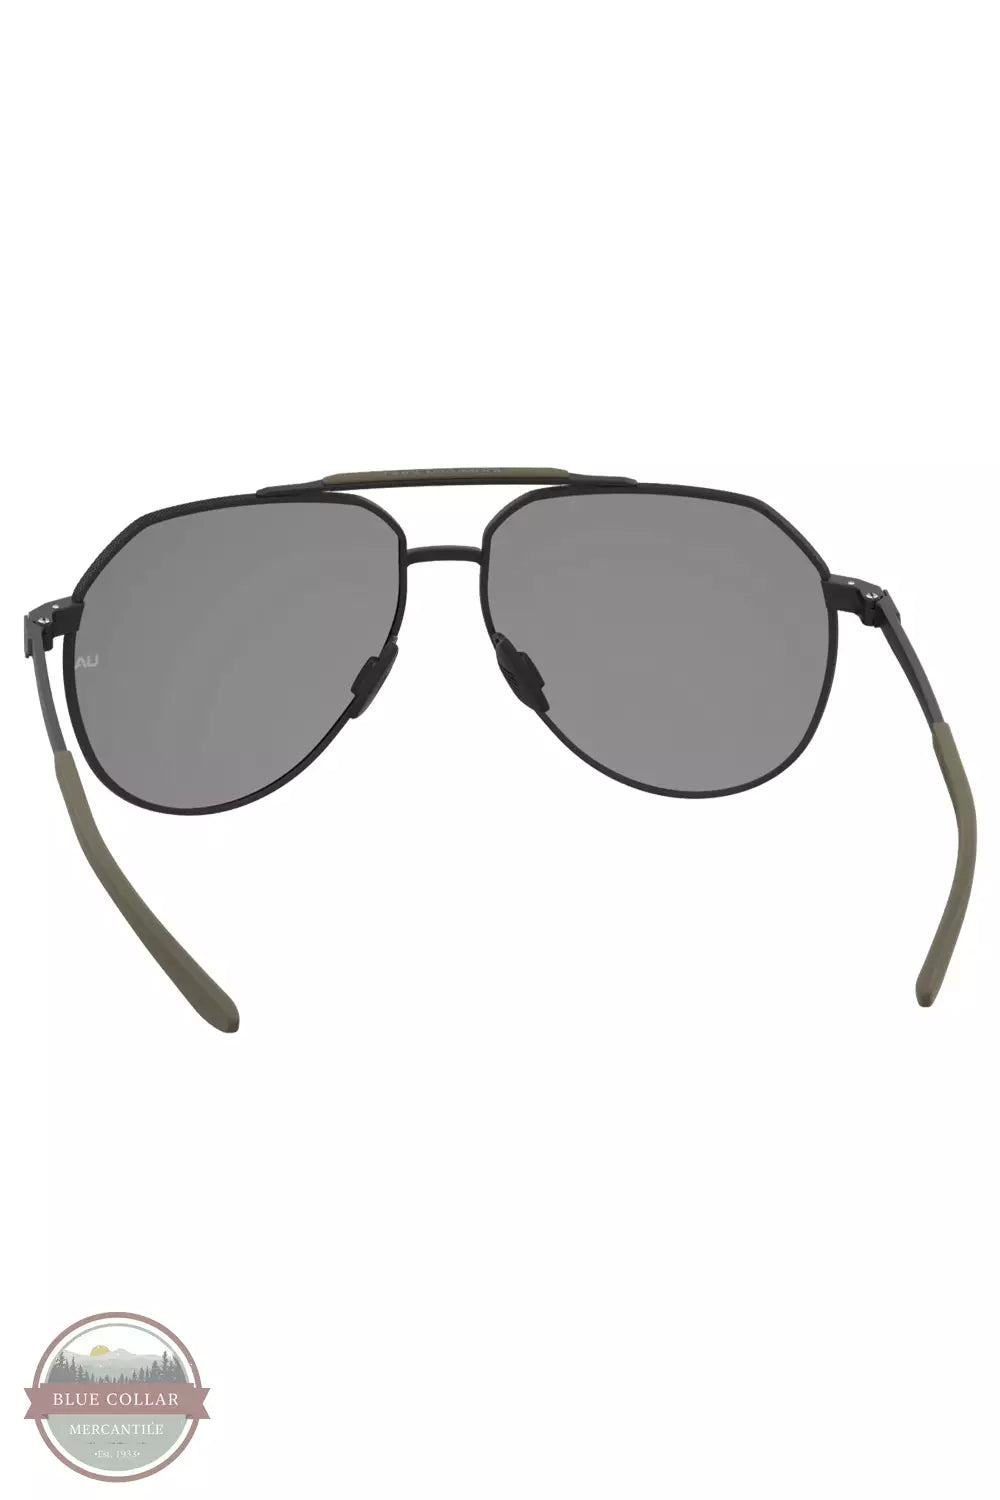 Under Armour 1385109-883 Honcho Mirror Sunglasses in Matte Black /Bronze Flash Mirror / Ruthenium Inside View